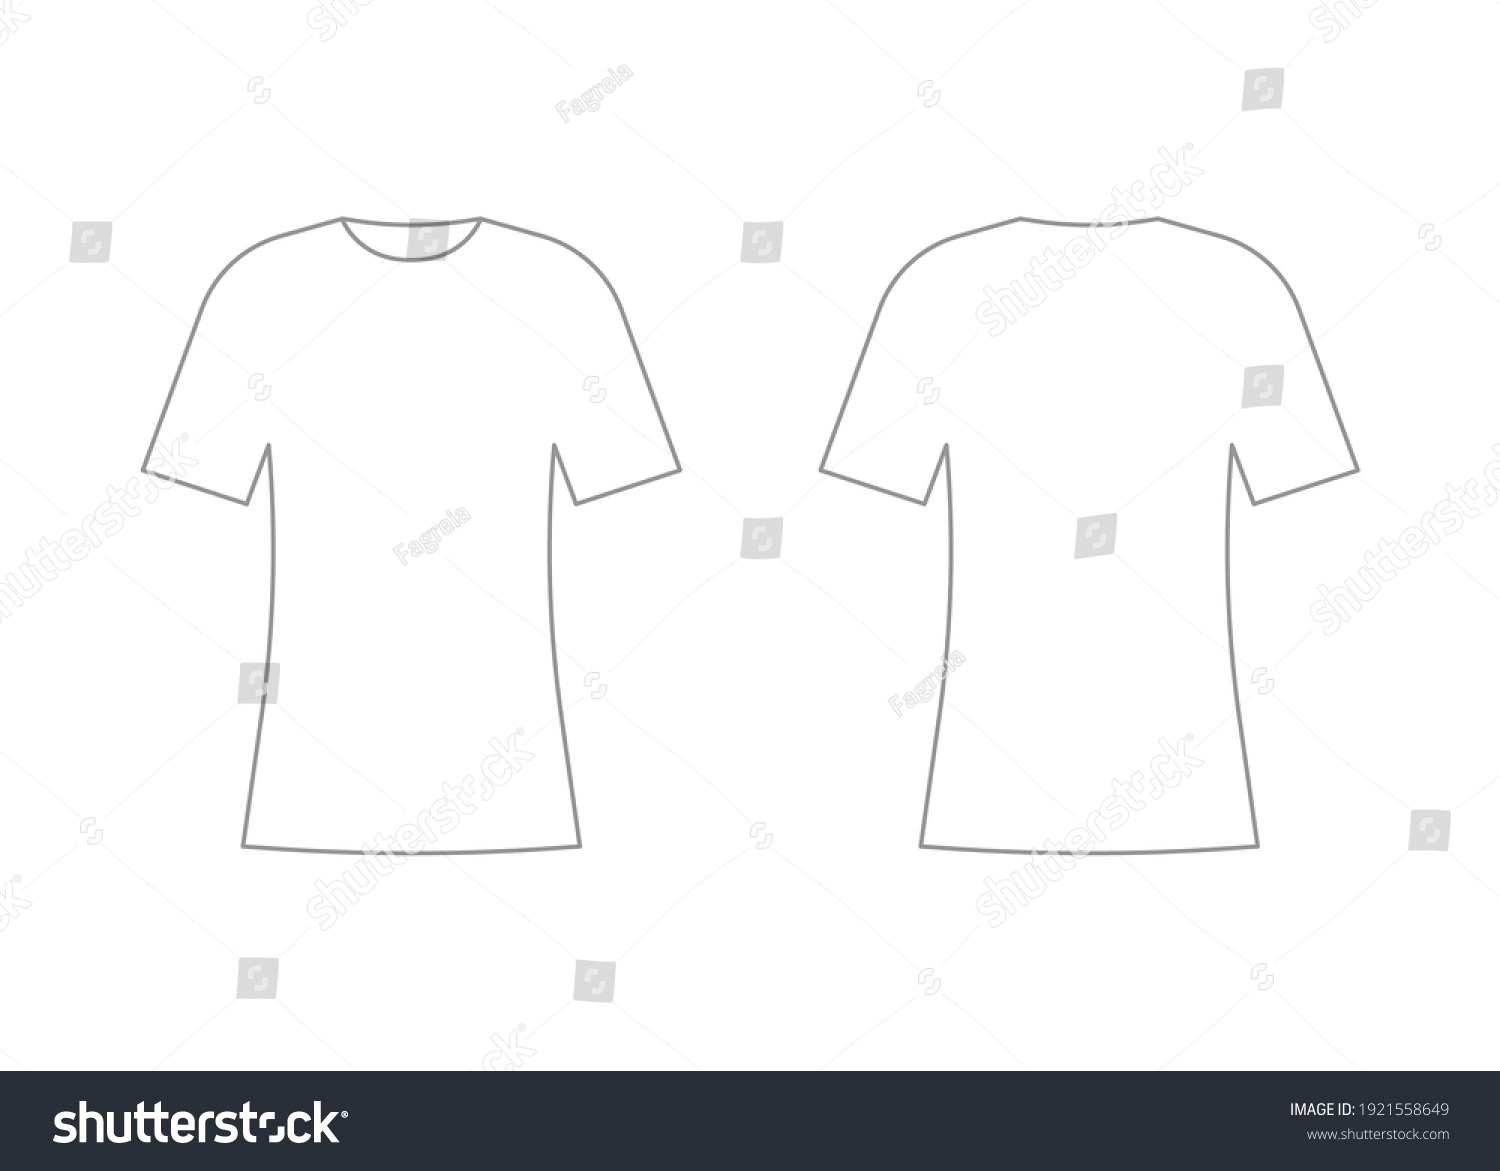 Short sleeved shirt Images, Stock Photos & Vectors | Shutterstock